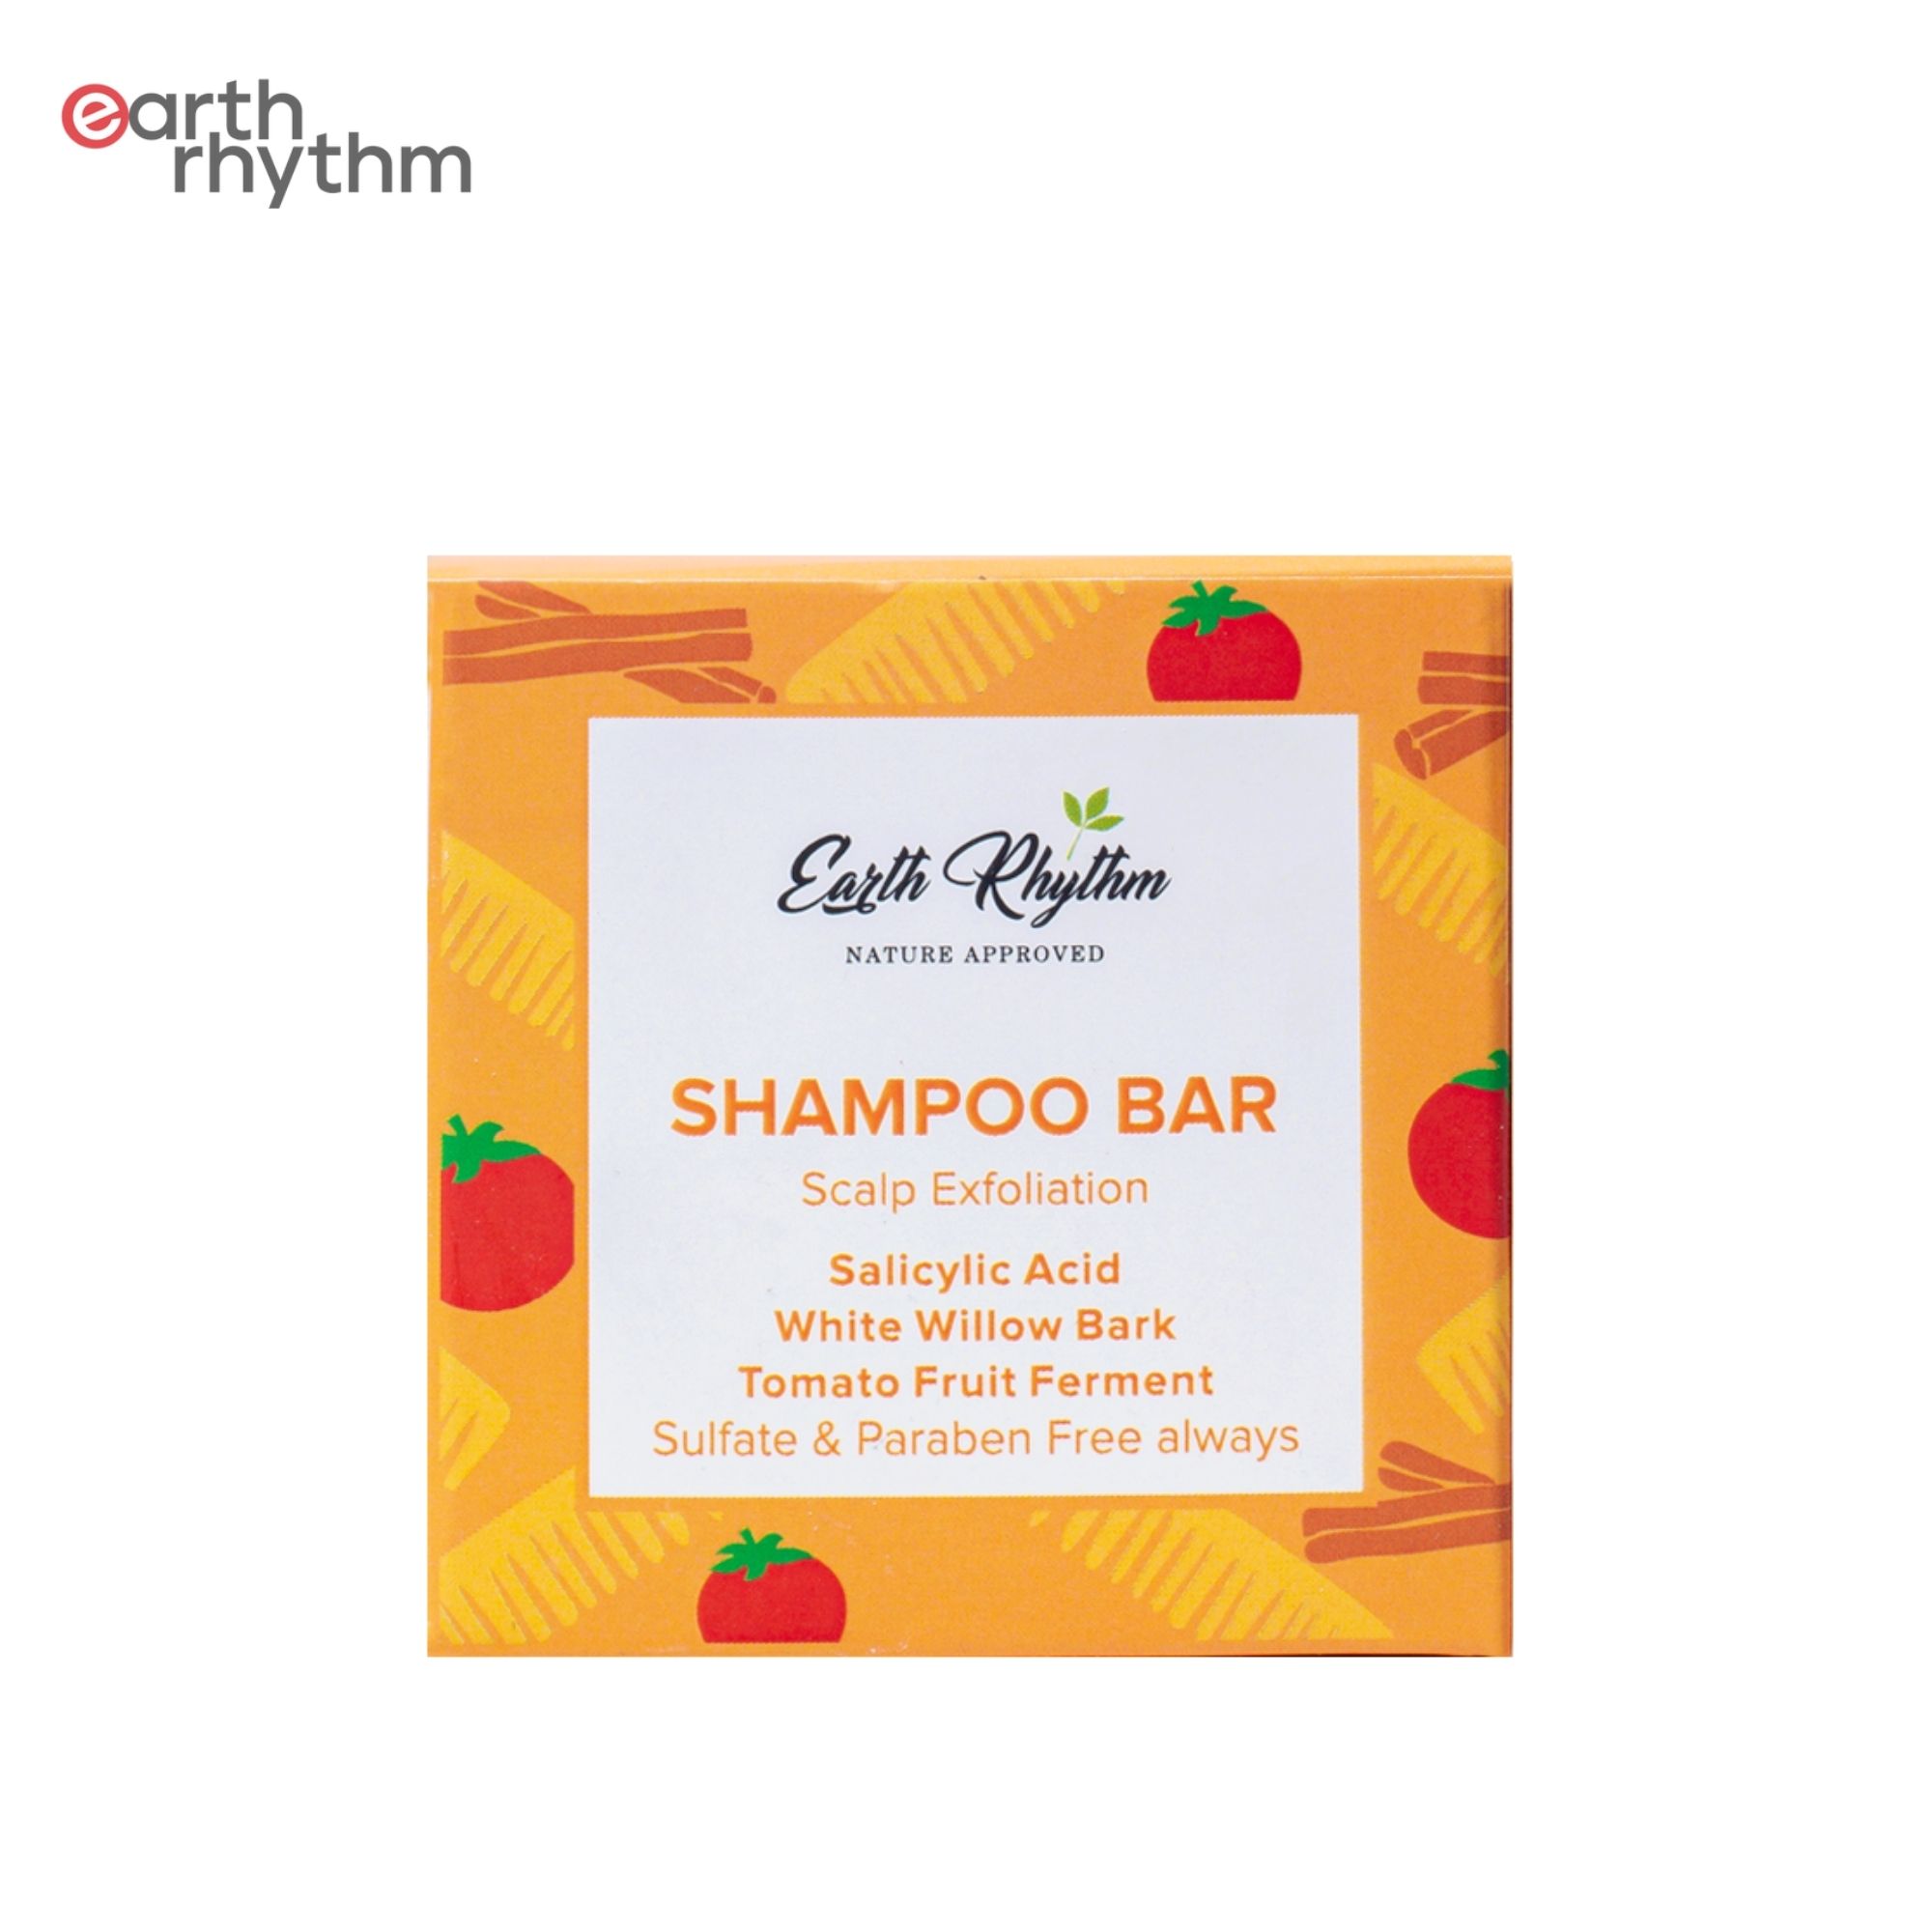 Earth Rhythm Exfoliating Shampoo Bar With Salicylic Acid, White Willow Bark & Tomato Fruit Ferment -